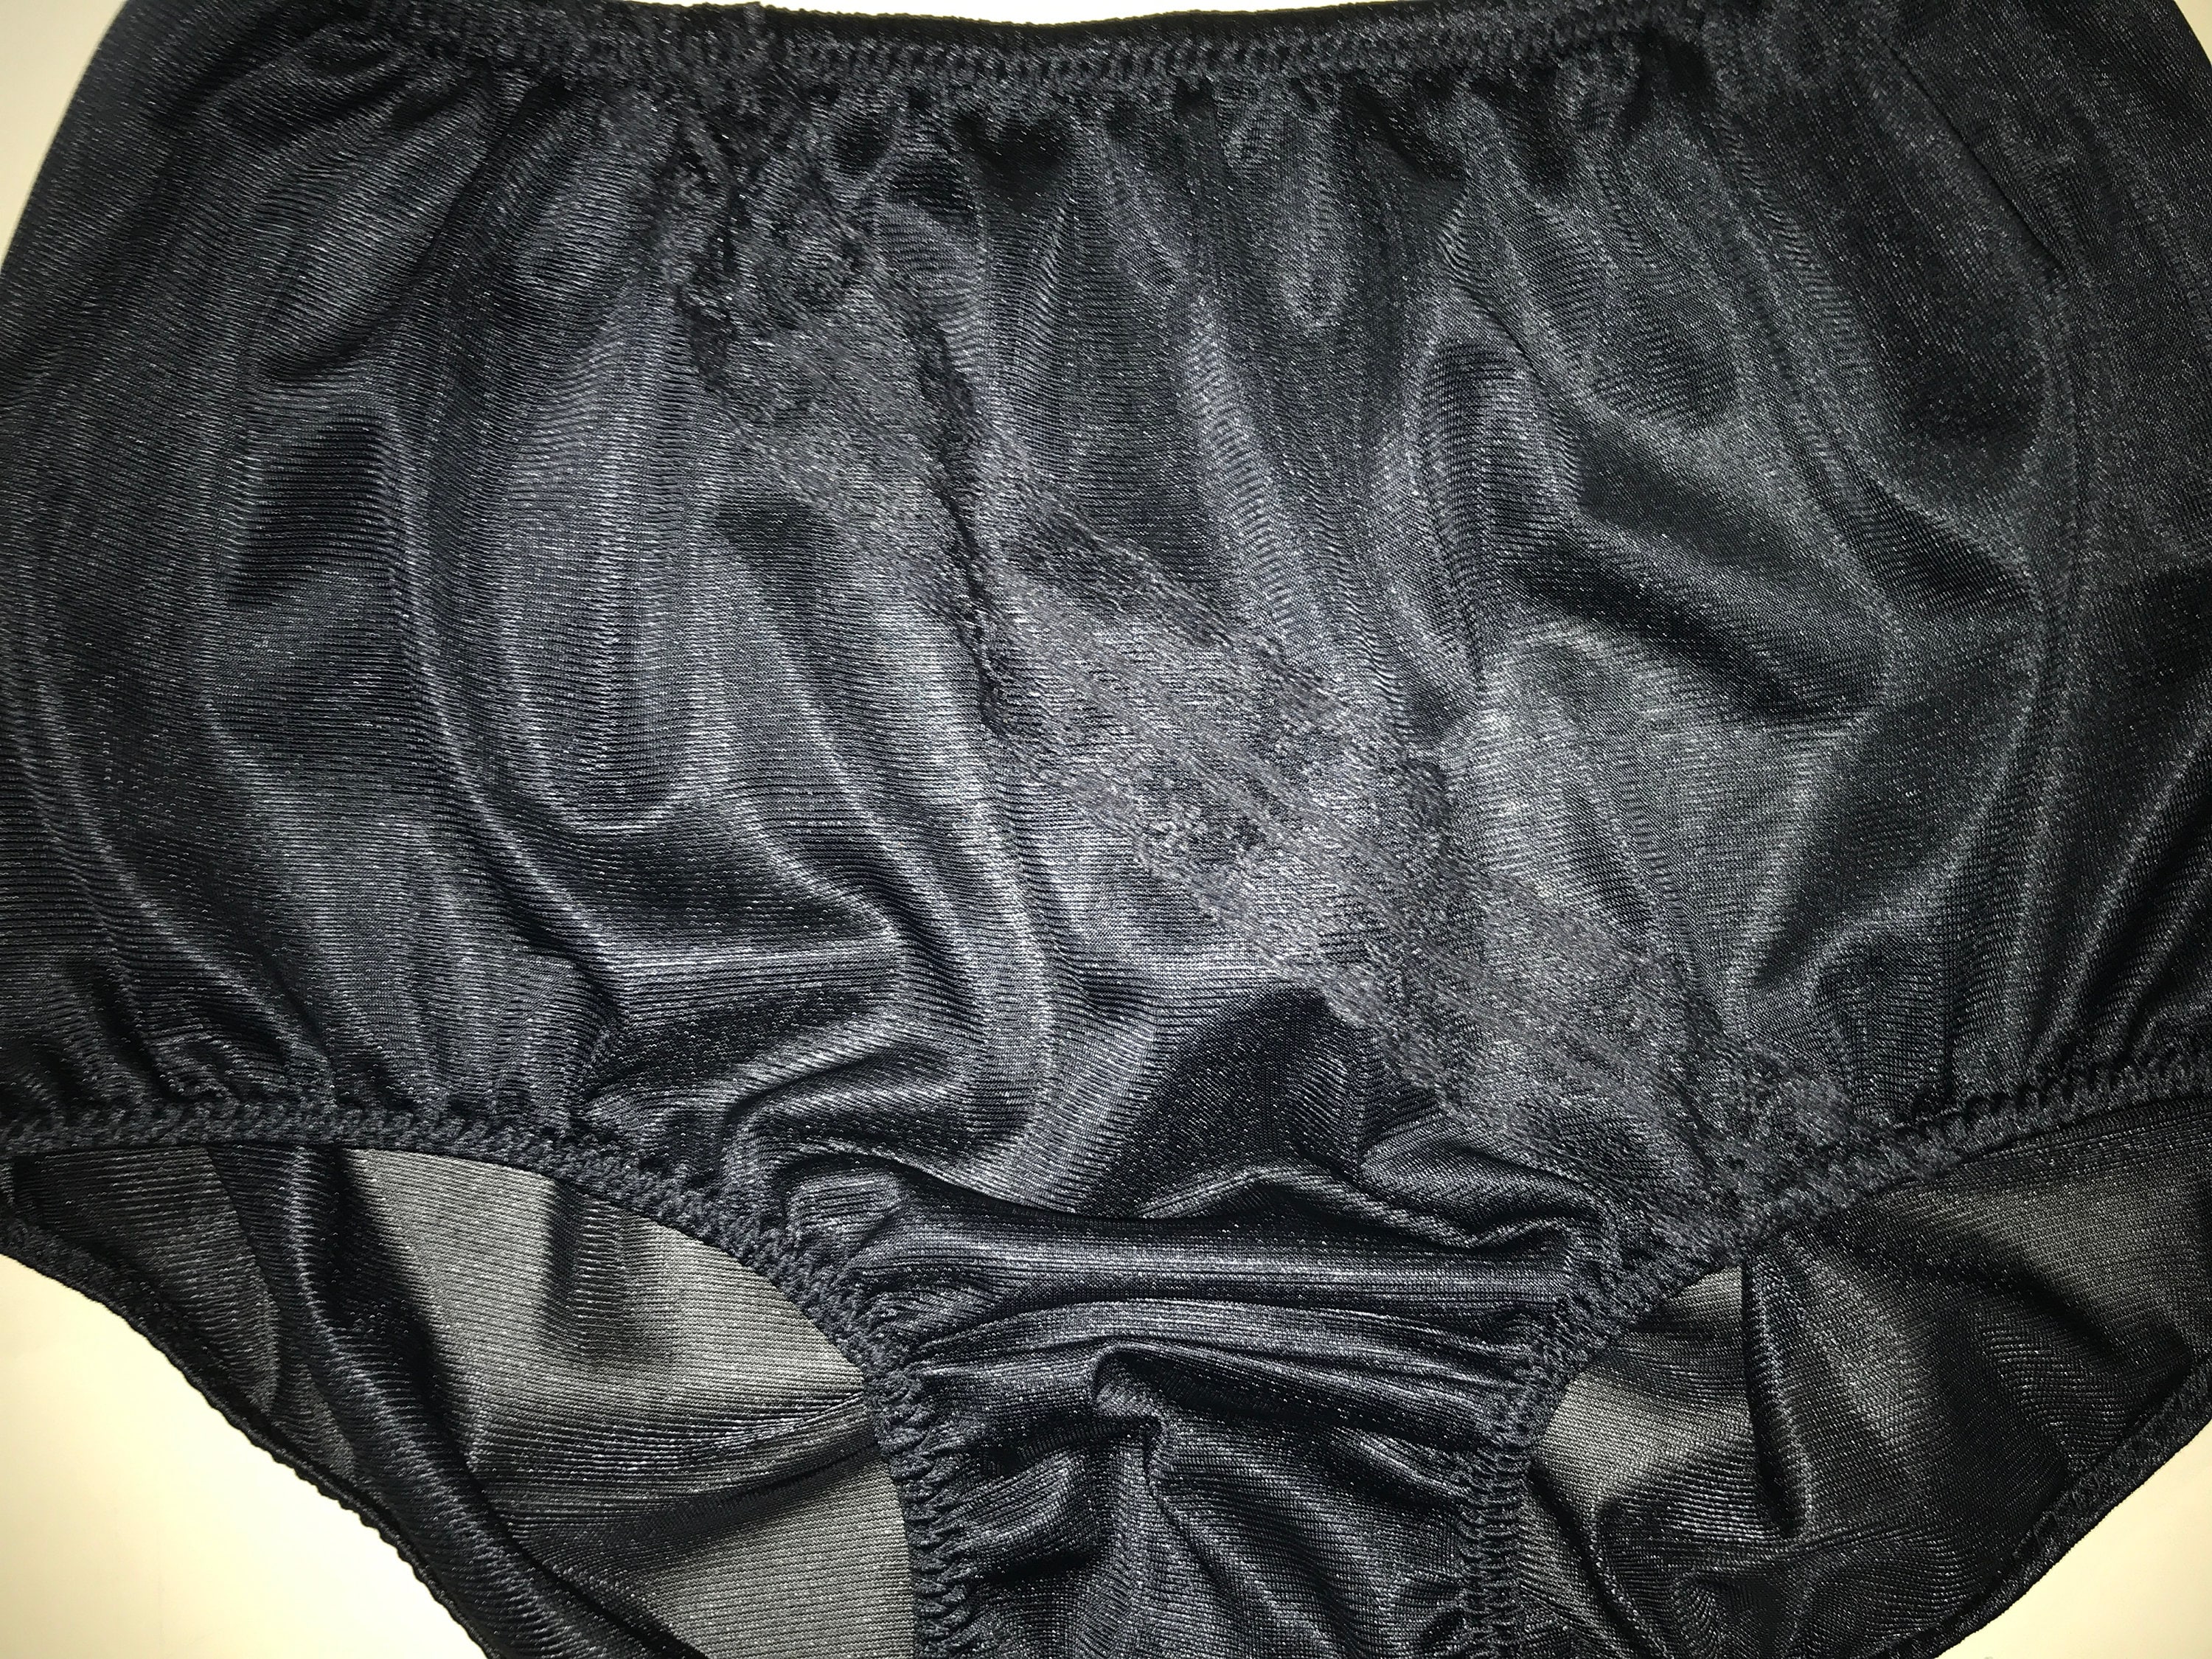 The Bombshell Lingerie Set Brazilian Underwear, Brazilian Panties